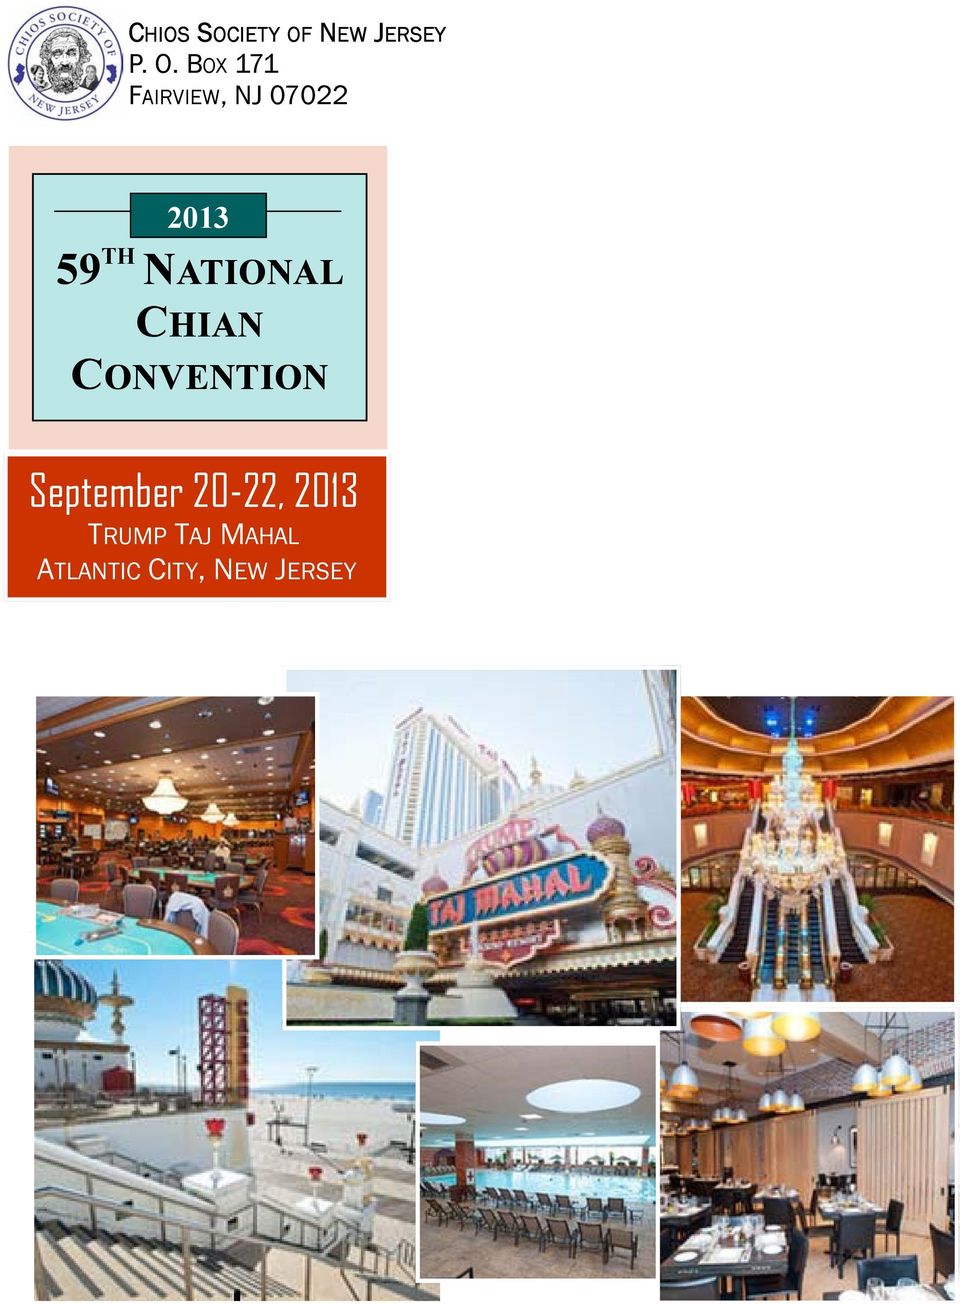 CONVENTION September 20-22, 2013